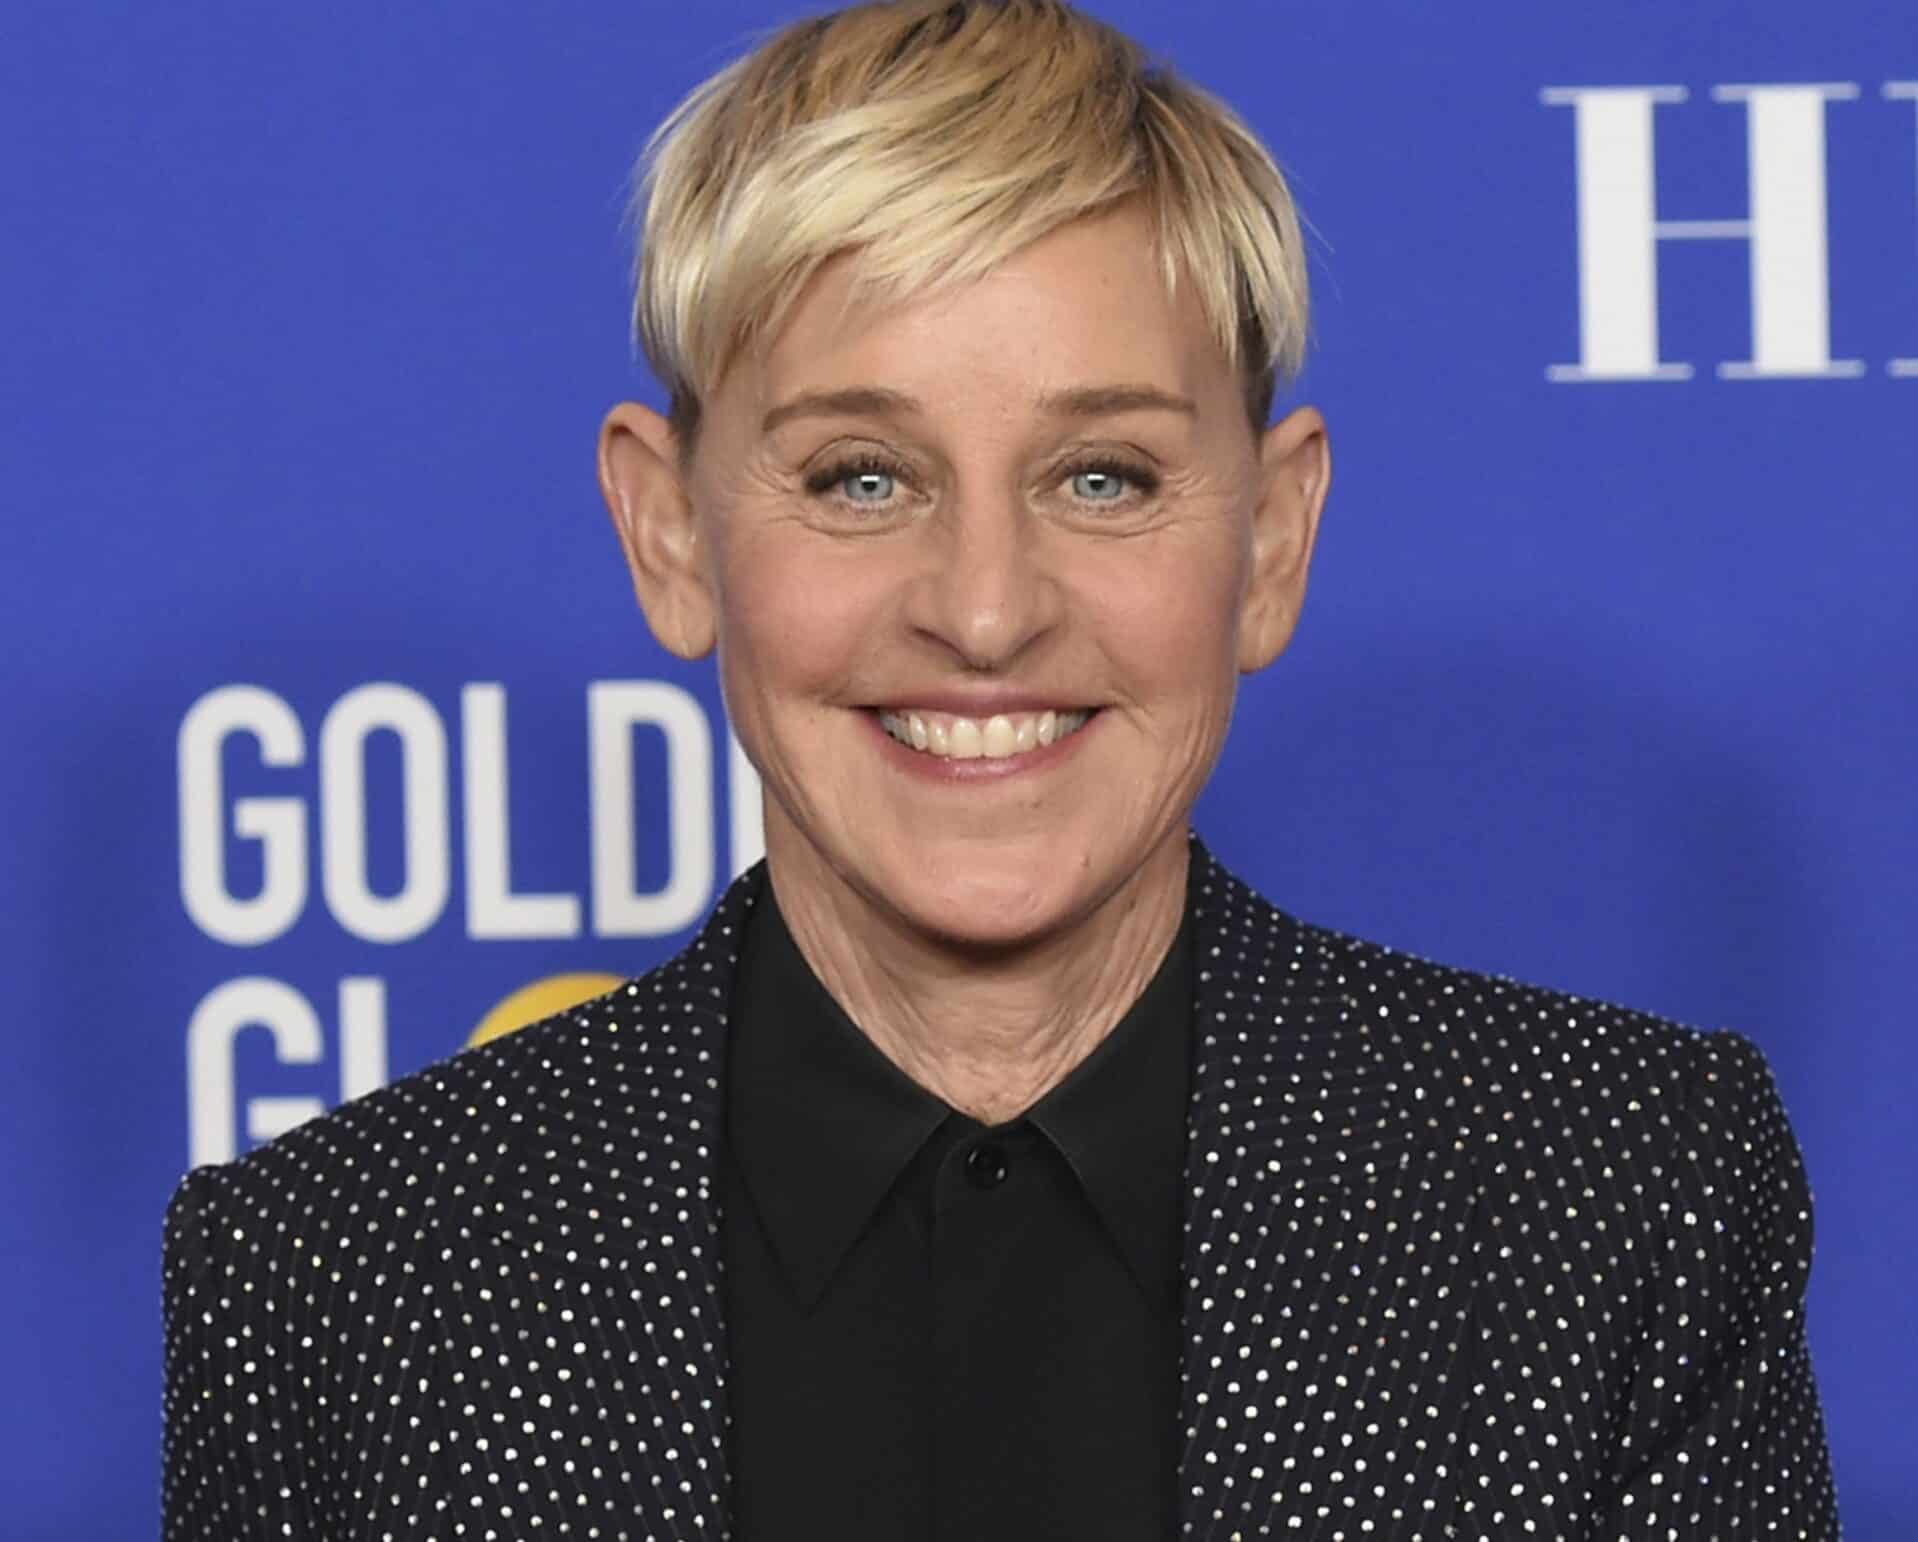 Ellen DeGeneres' estimated net worth is $380 million